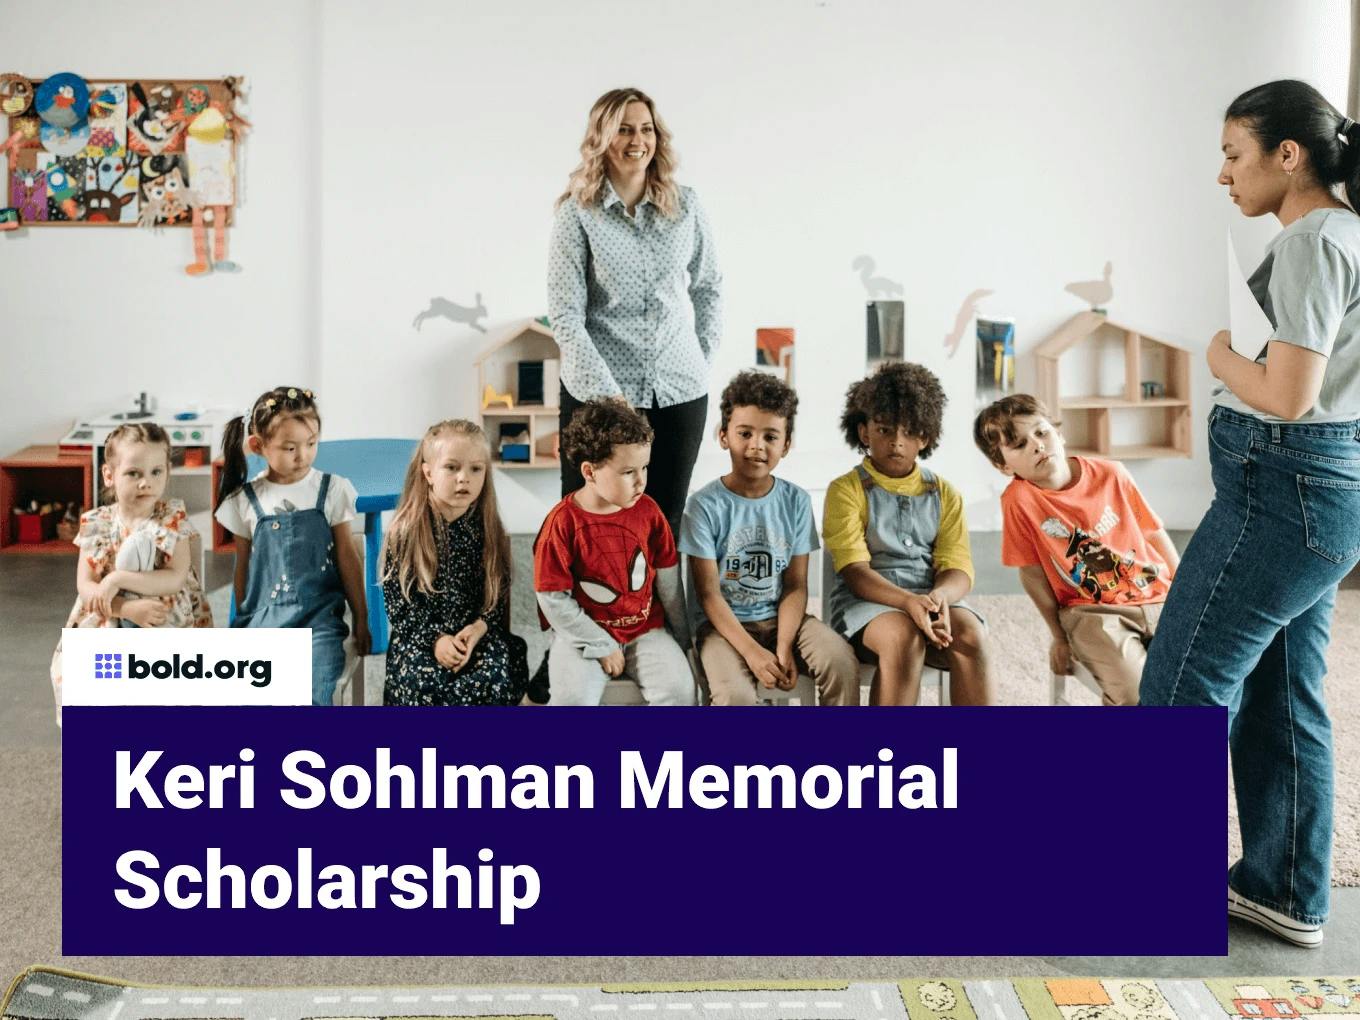 Keri Sohlman Memorial Scholarship